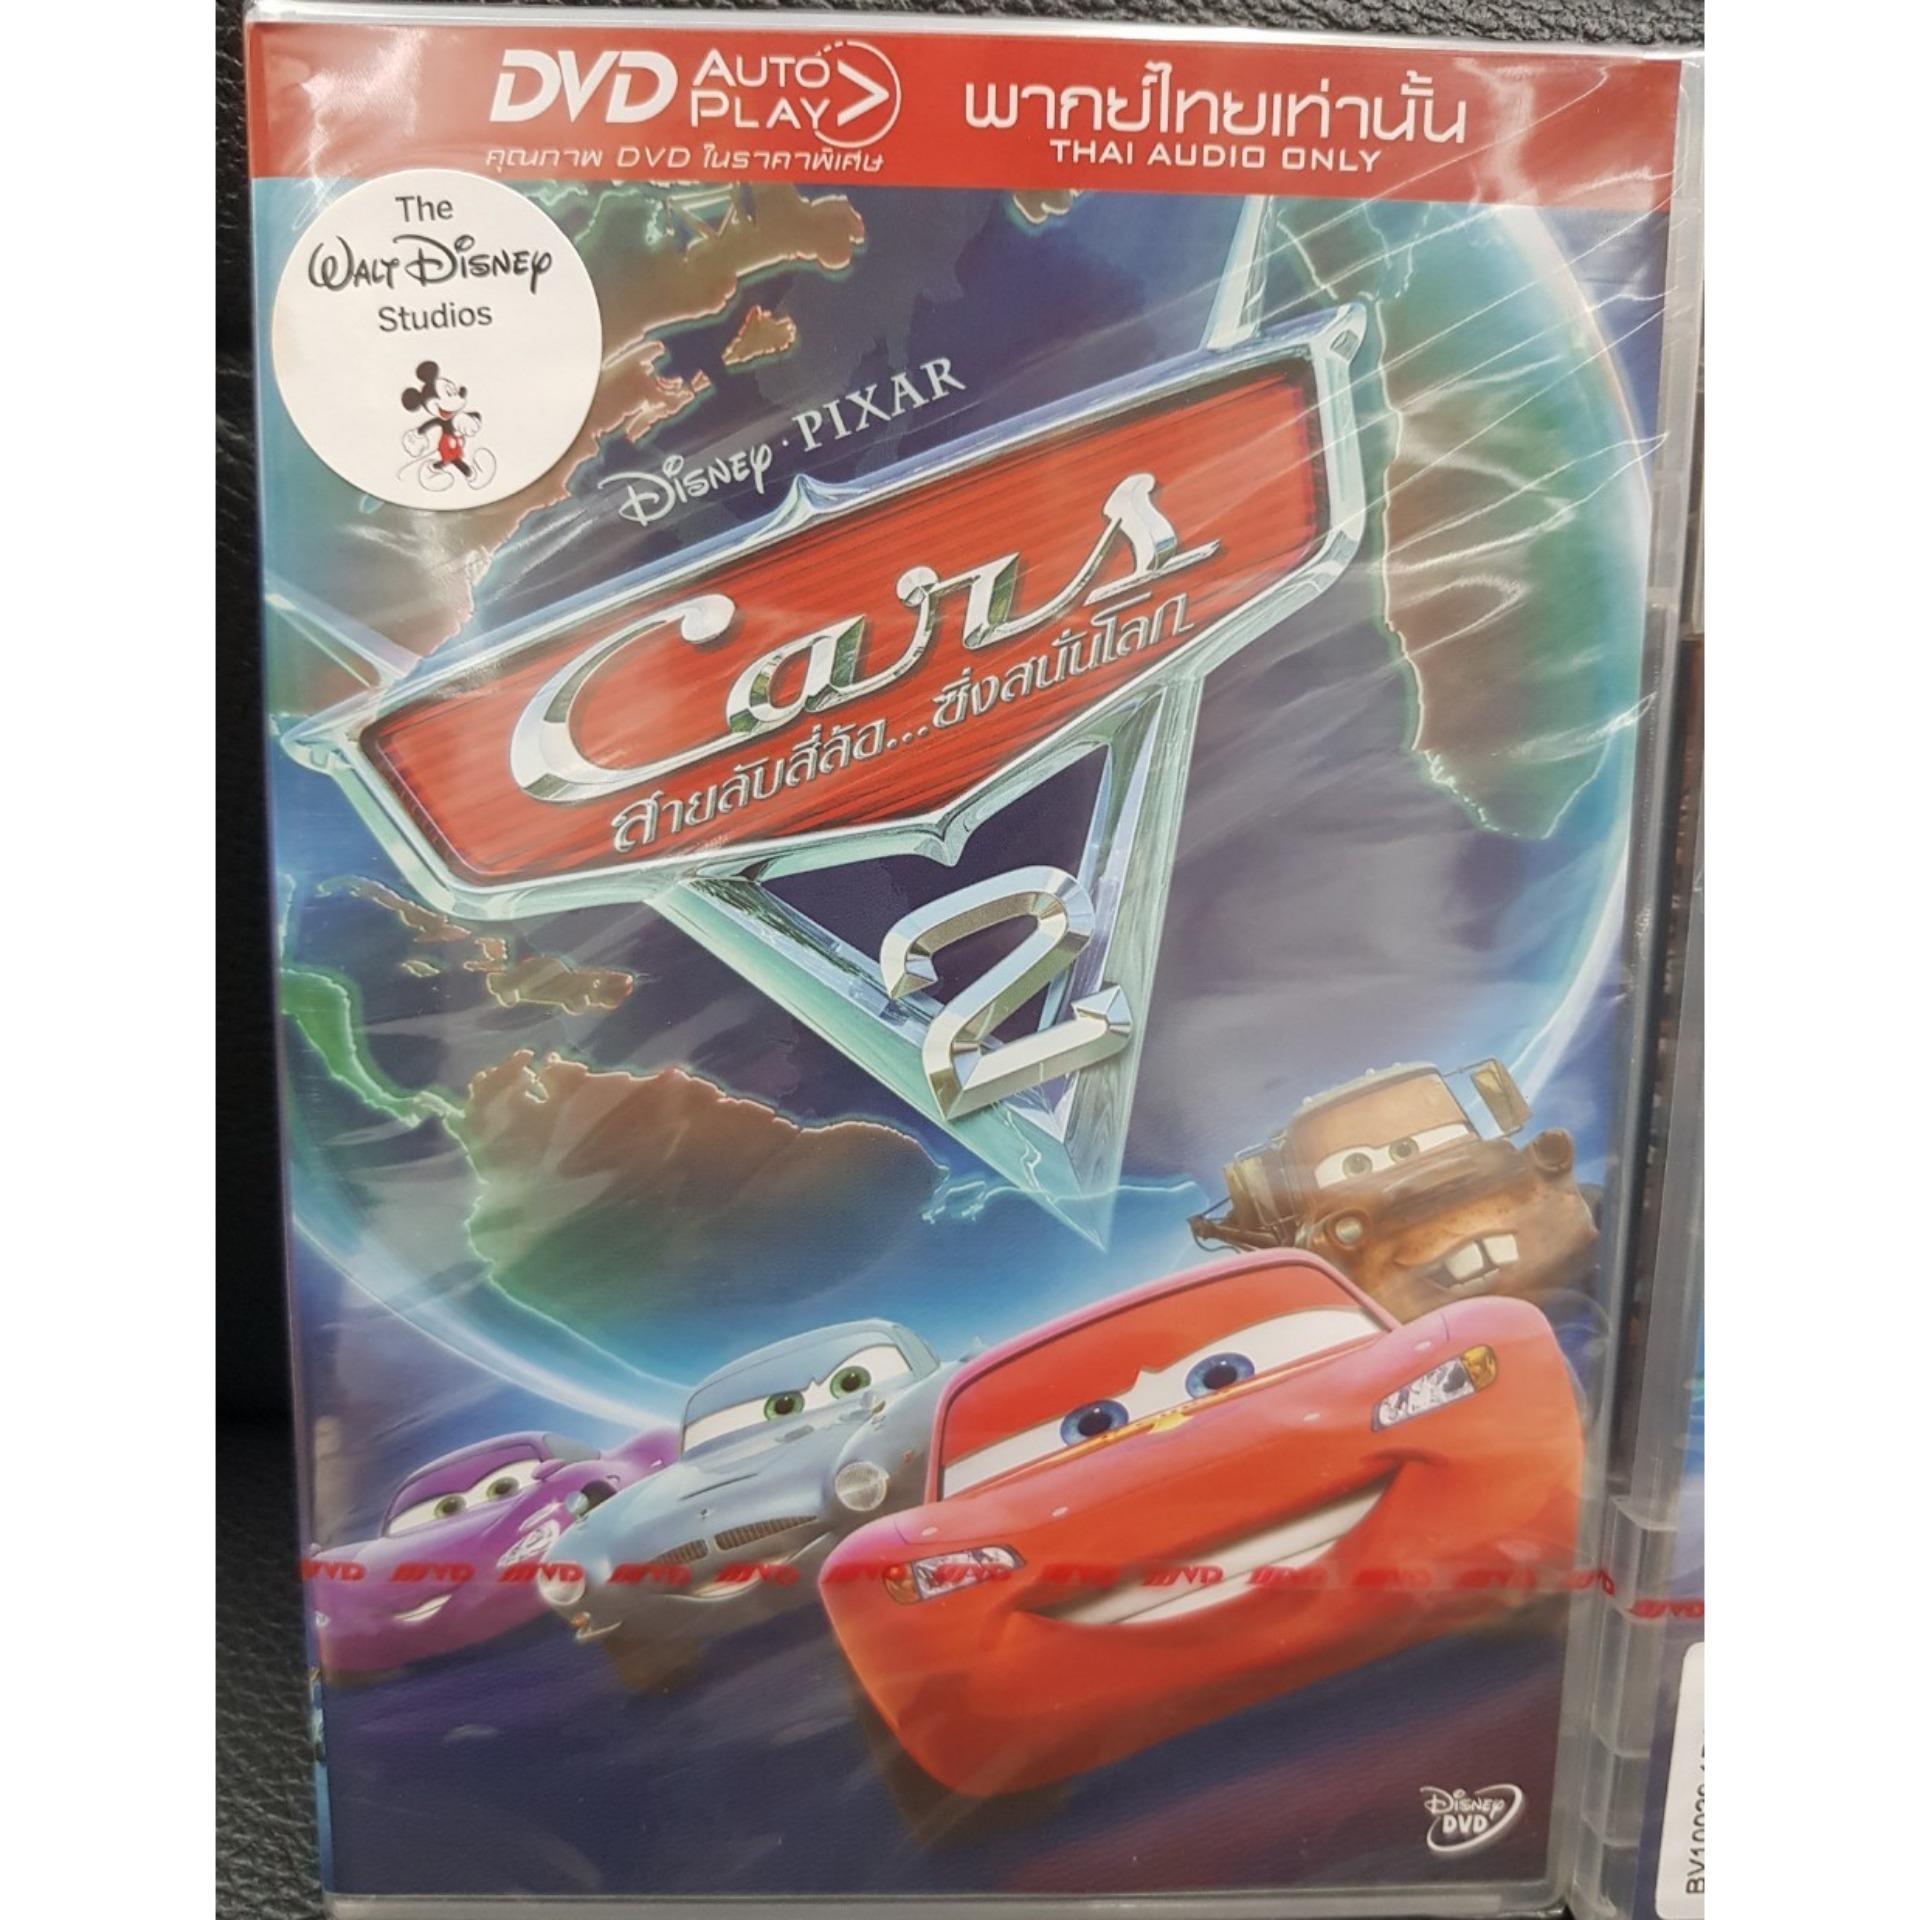 DVDหนัง CARS2 สายลับสี่ล้อ...ซิ่งสนั่นโลก DVD AUTO PLAY พากย์ไทยเท่านั้น (MVDDVDไทย179-cars2) MVD DISNEY PIXAR CD VCD DVD หนัง การ์ตูน ดิสนีย์ cartoon